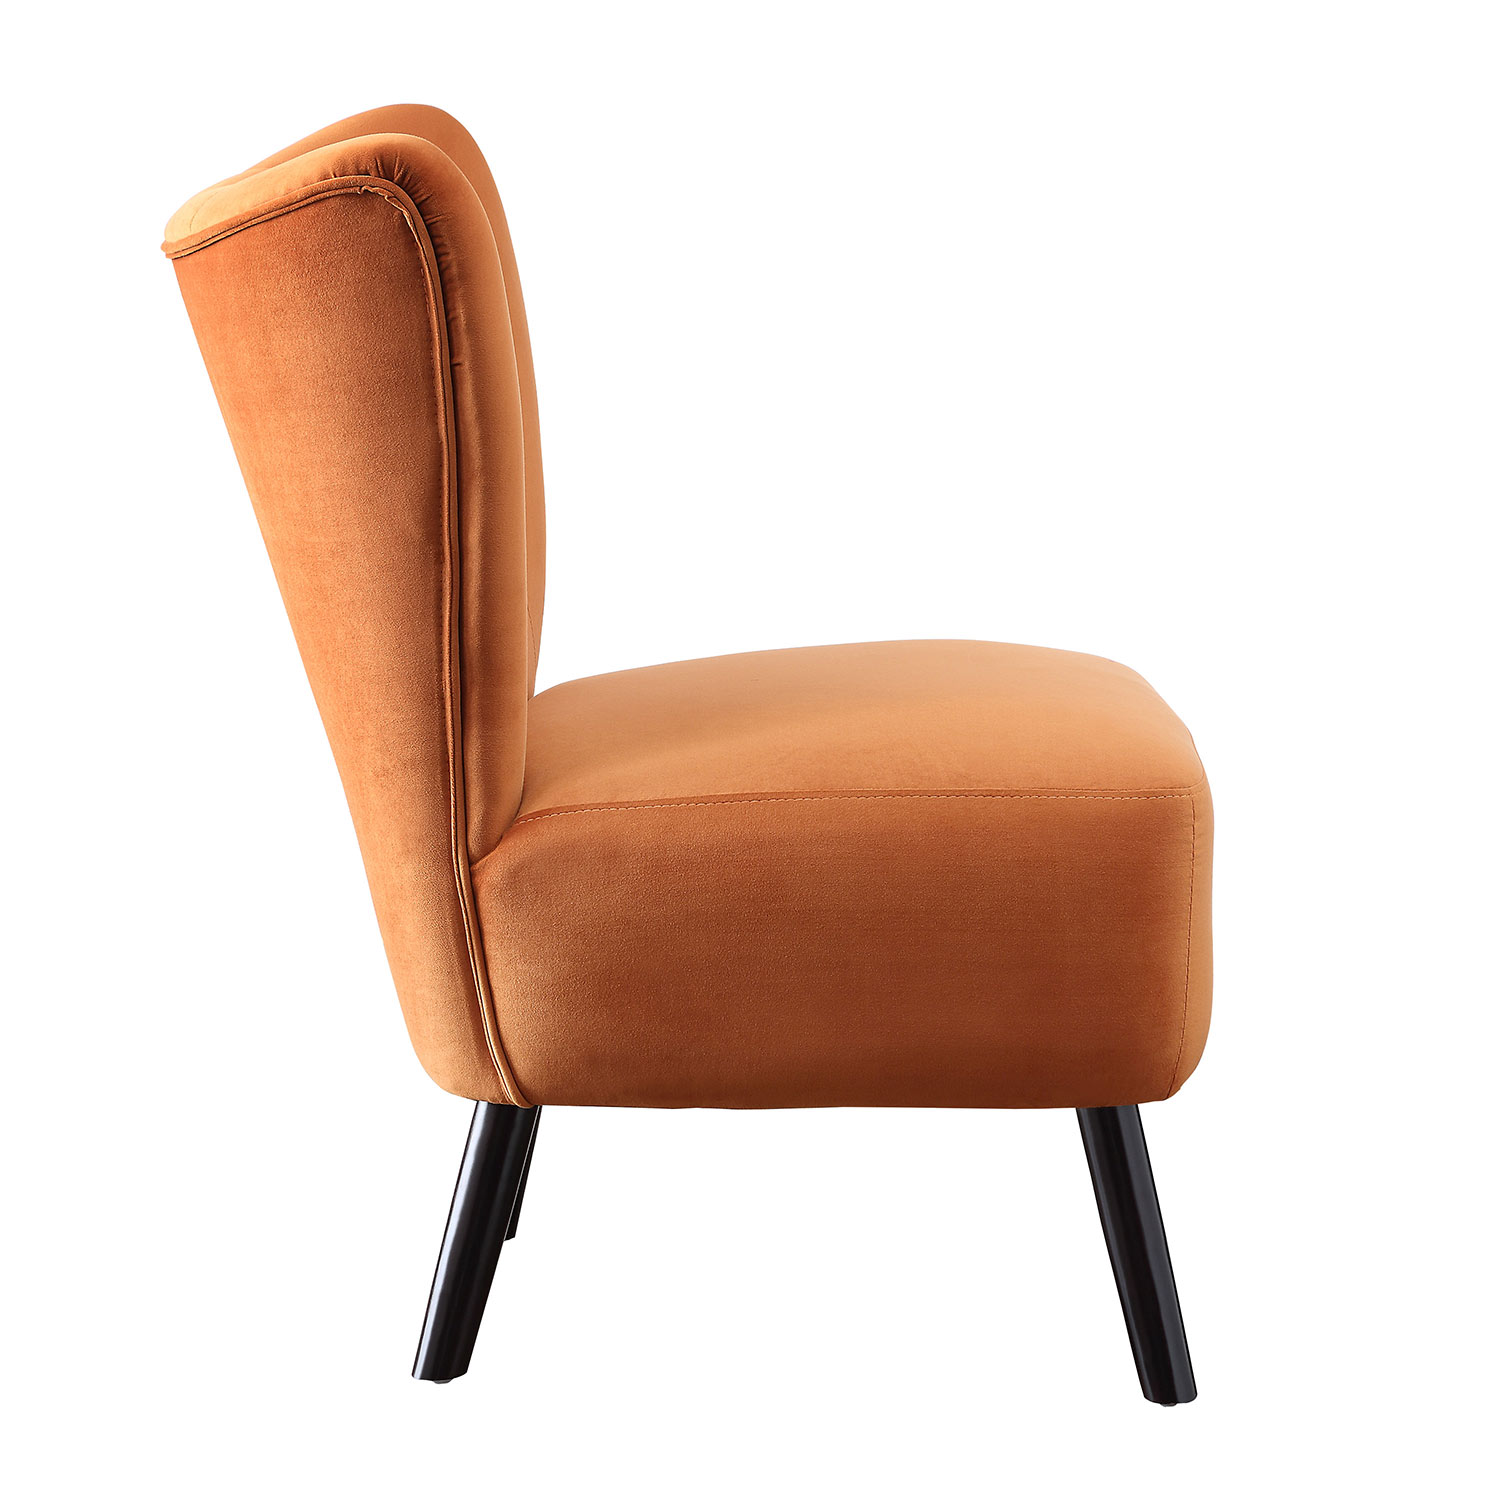 Homelegance Imani Accent Chair - Orange